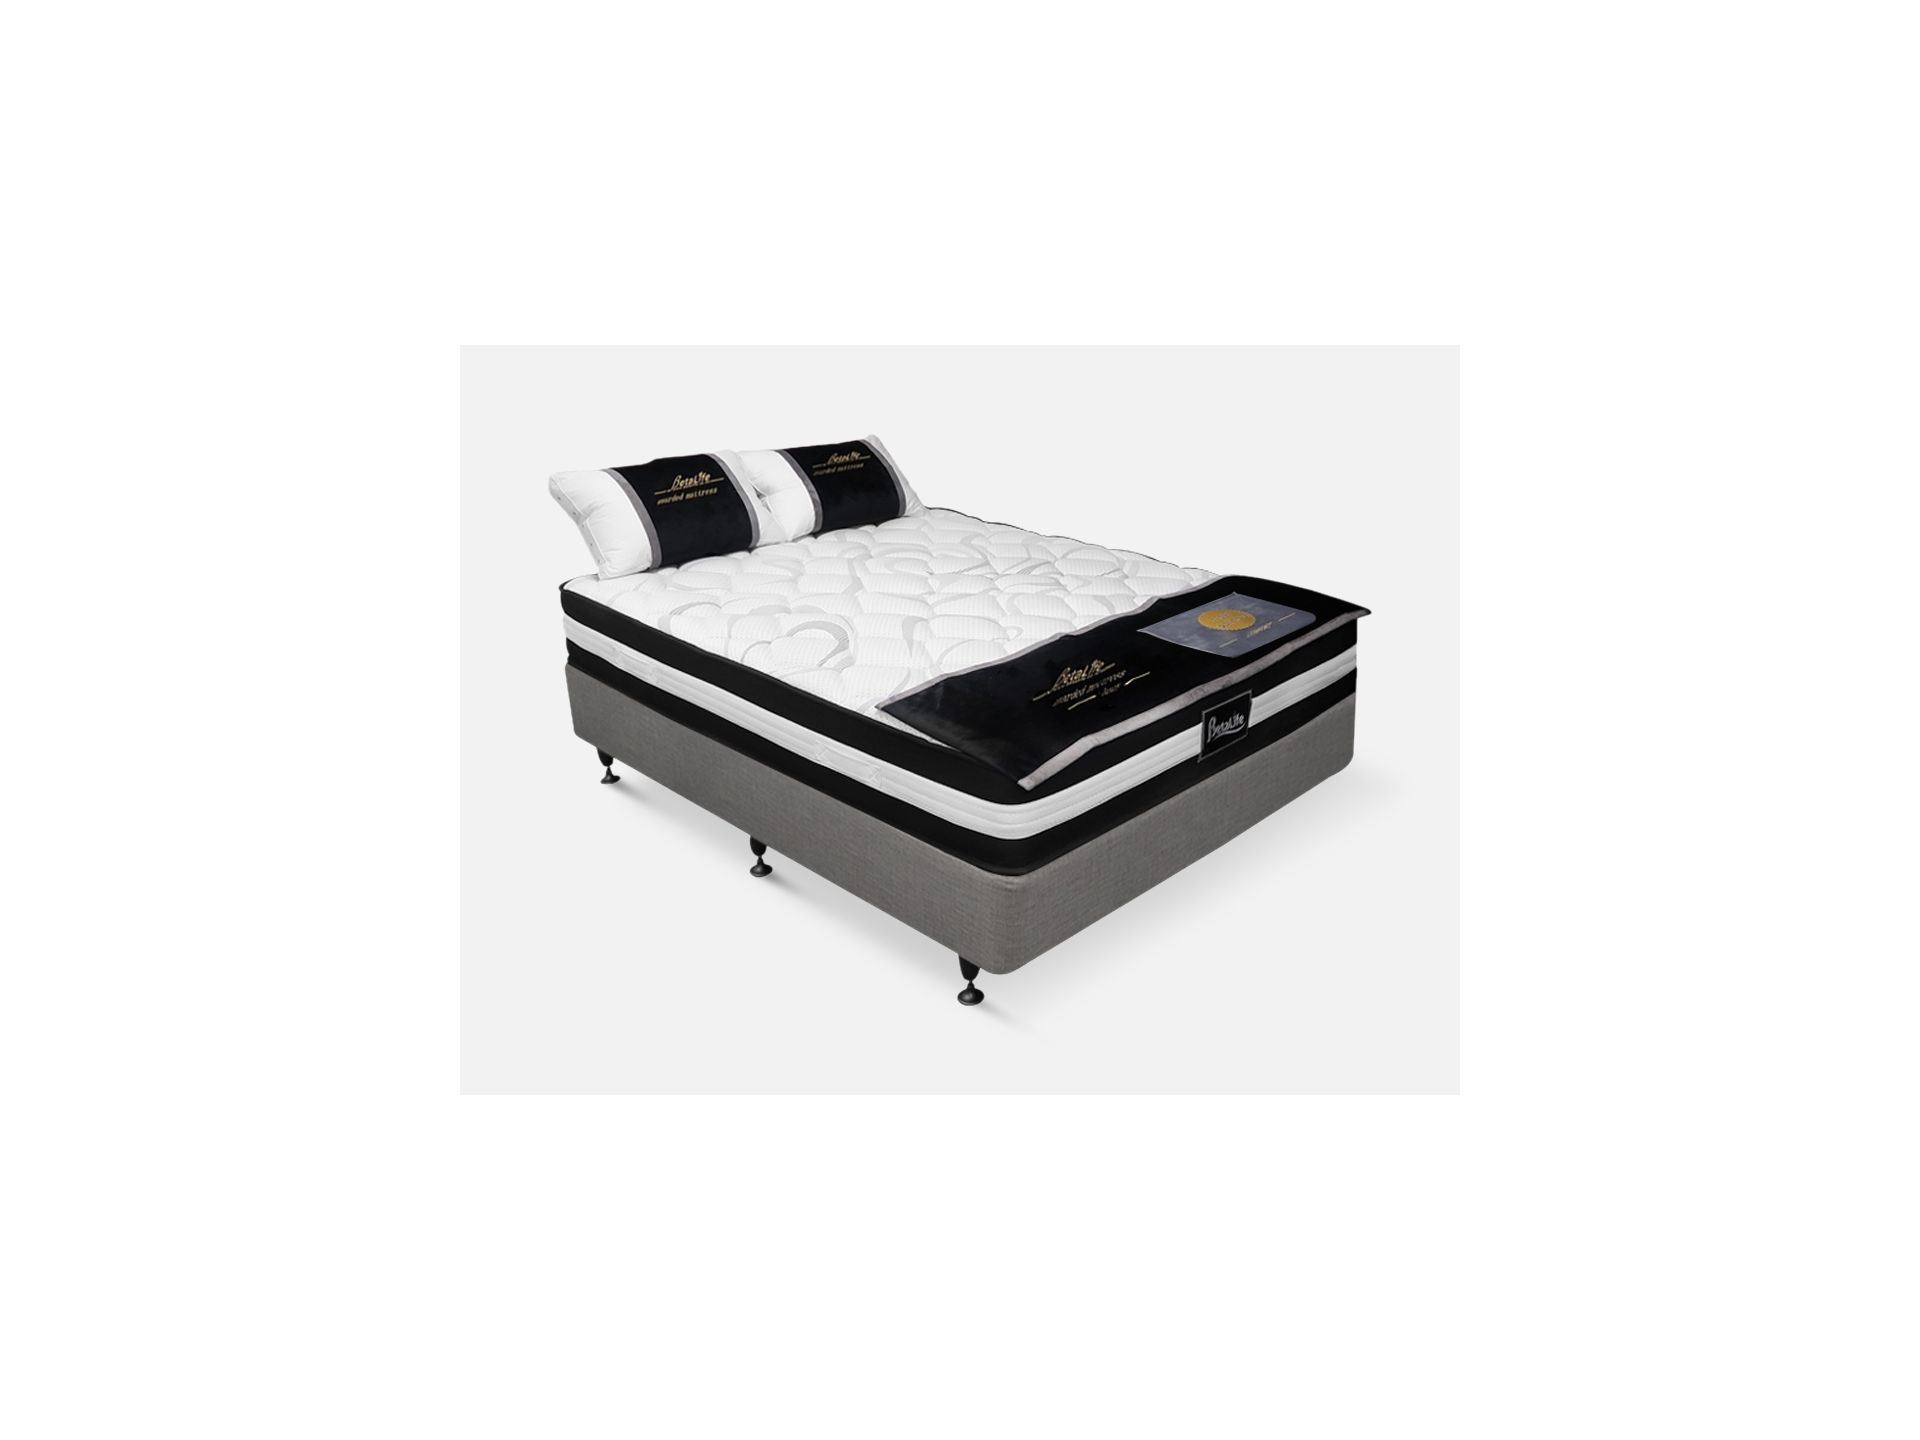 VINSON Fabric Queen Bed with Ultra Comfort Mattress - GREY